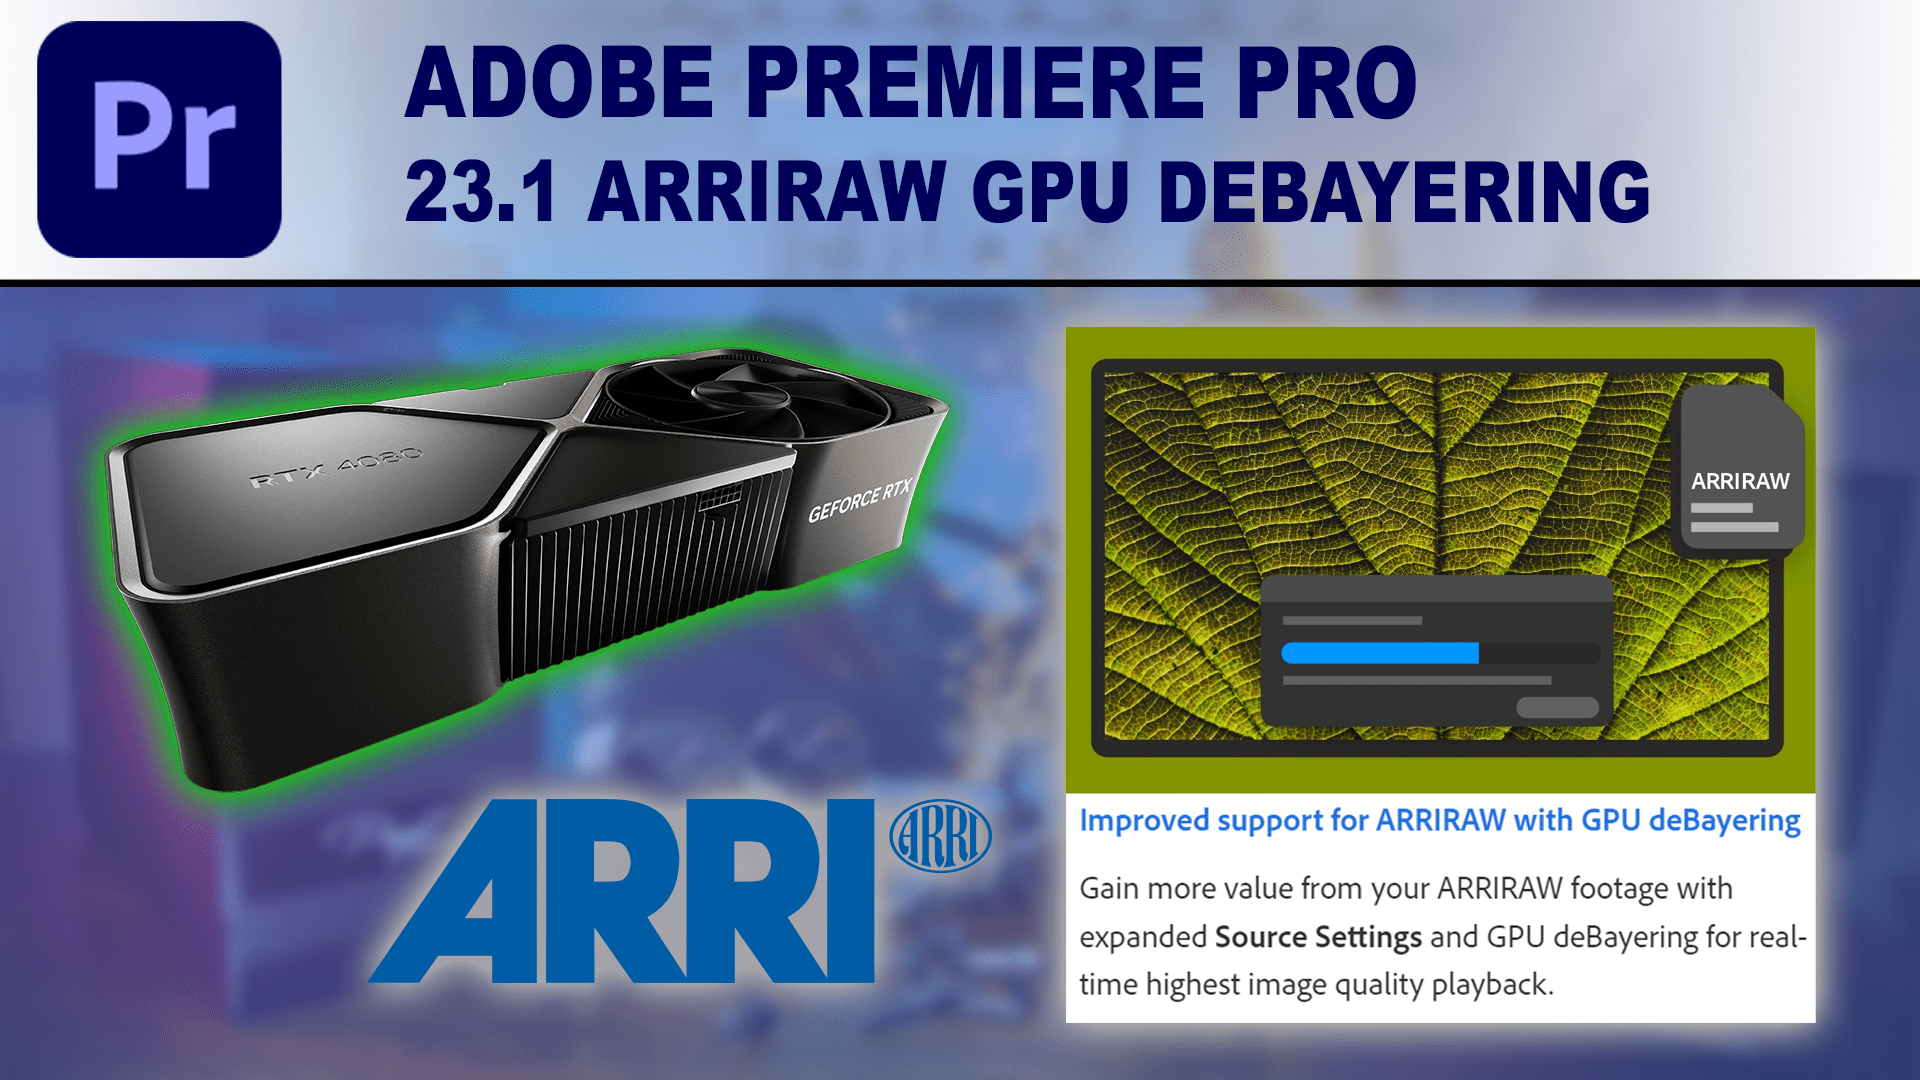 Premiere Pro 23.1 Update for ARRIRAW GPU Debayering